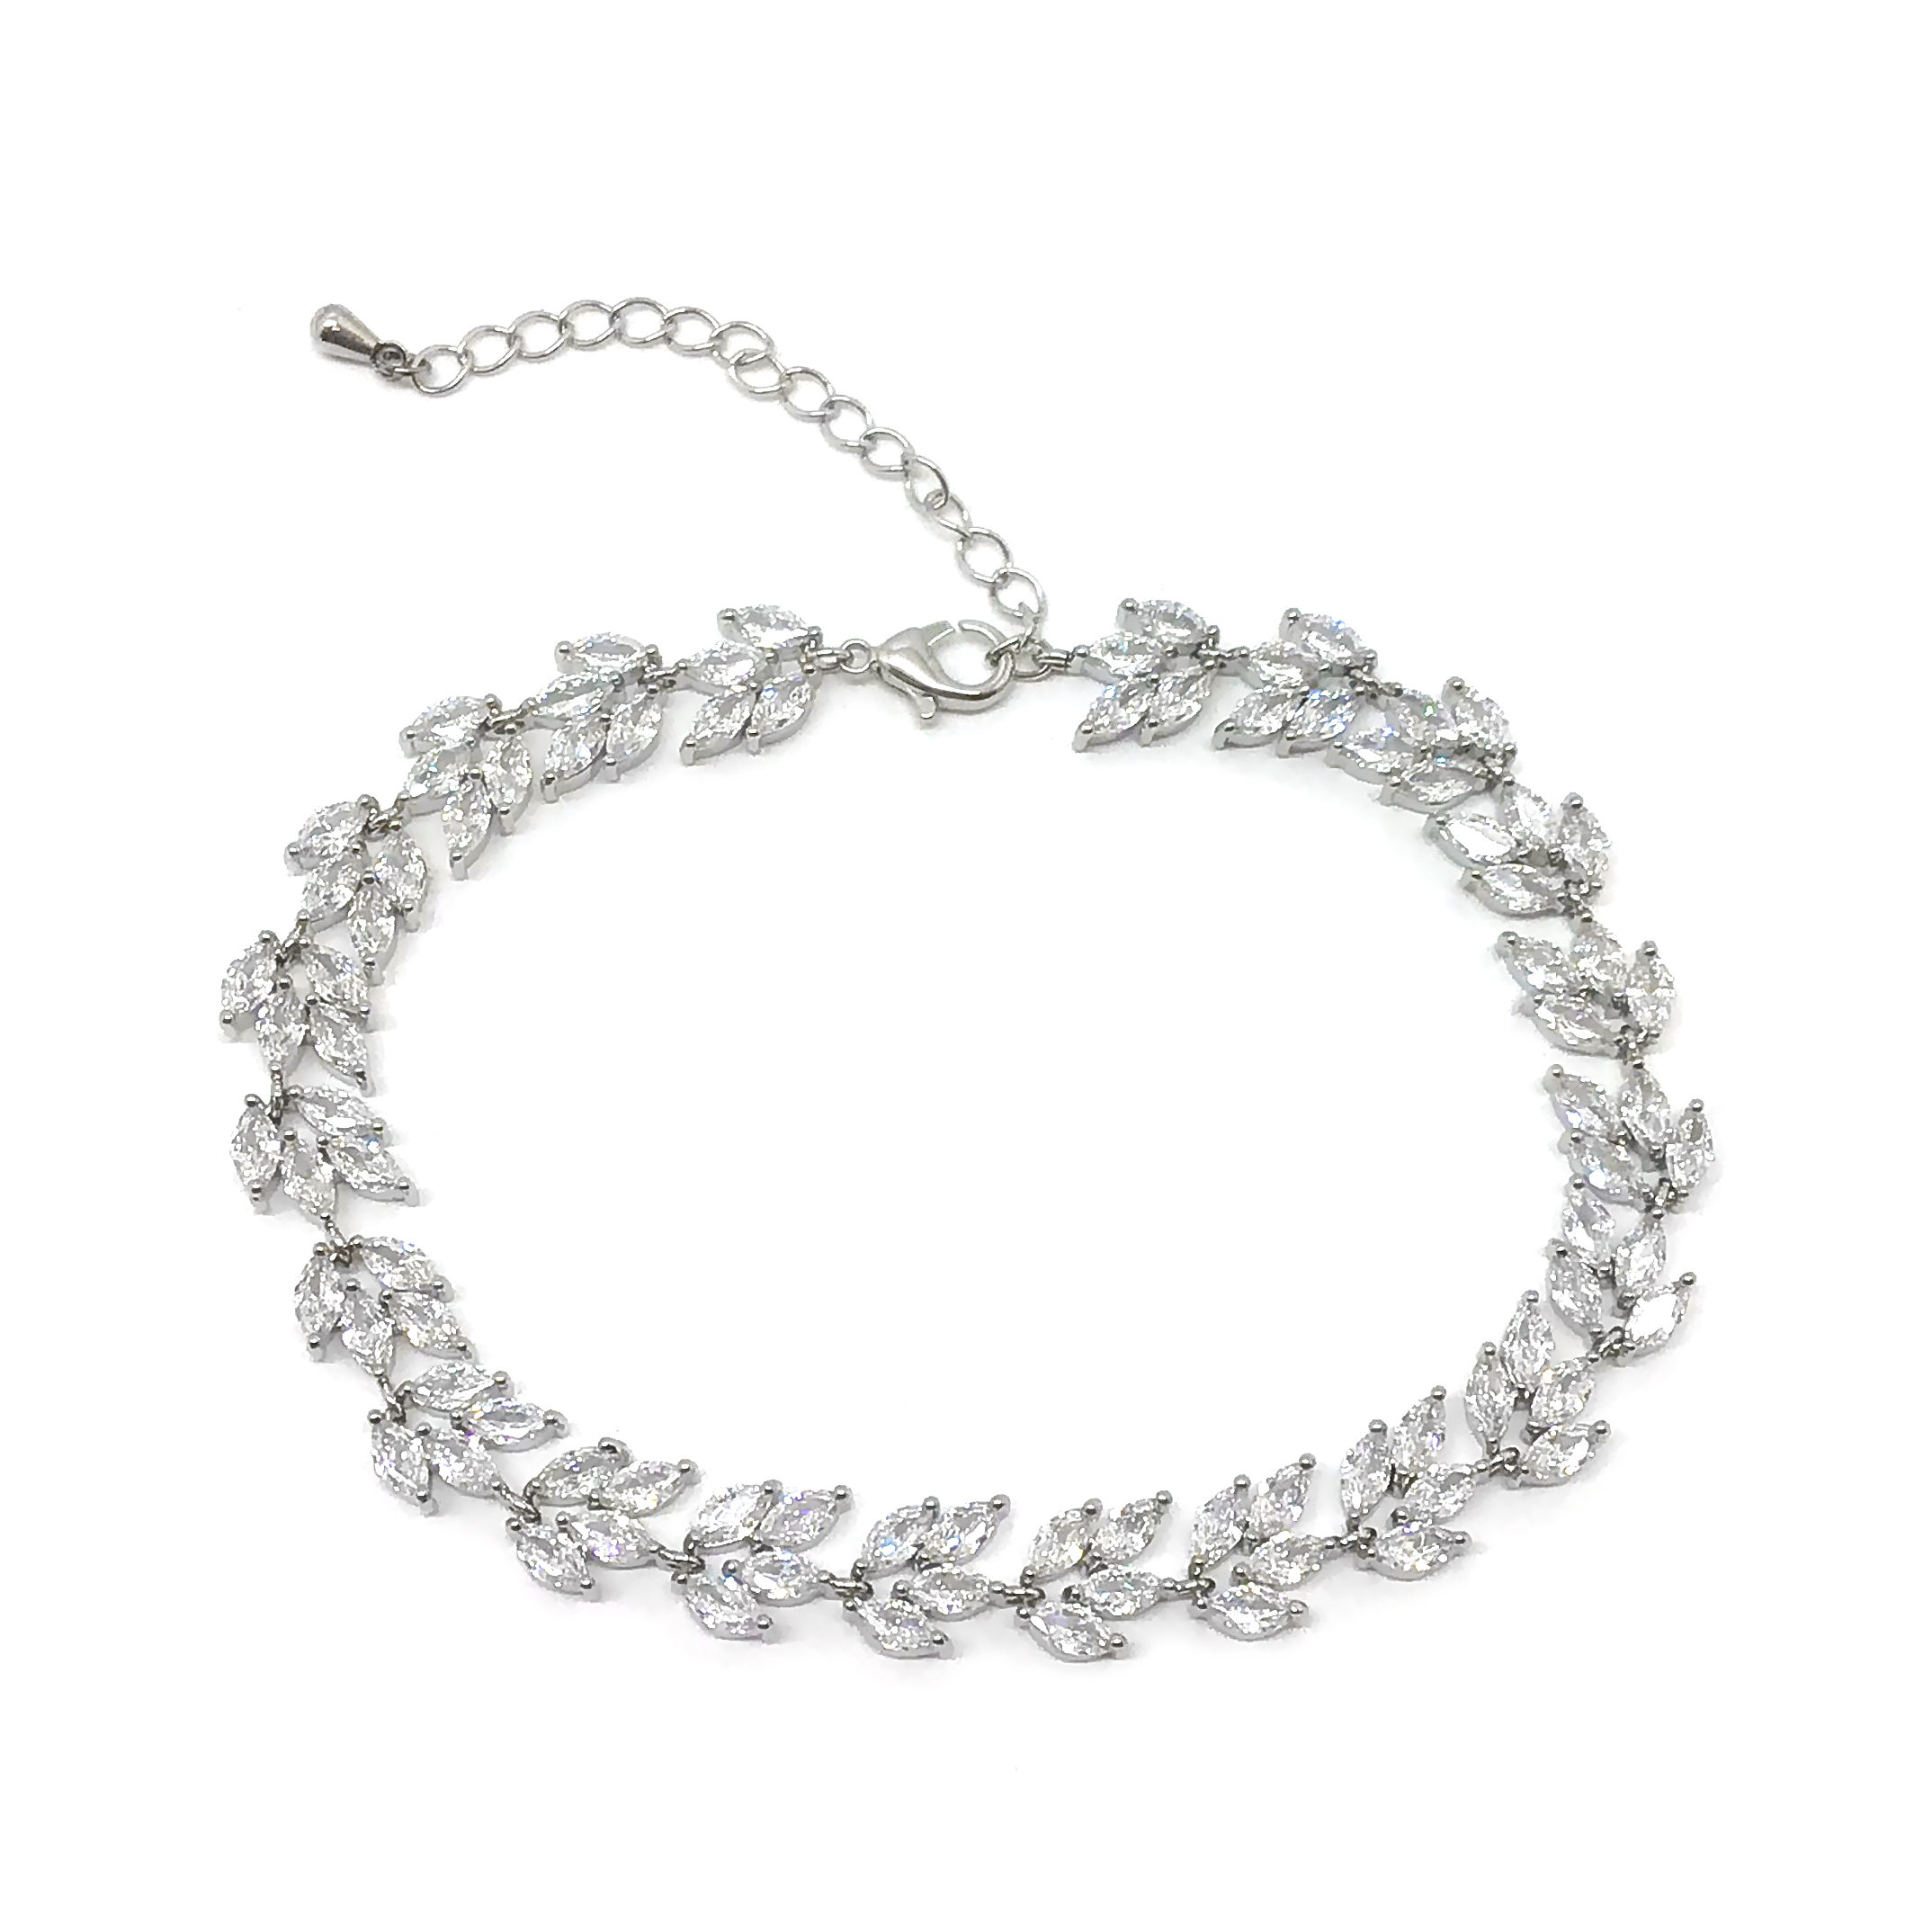 Solid Silver Bracelets|Whinny|Jeanette Maree|Shop Online